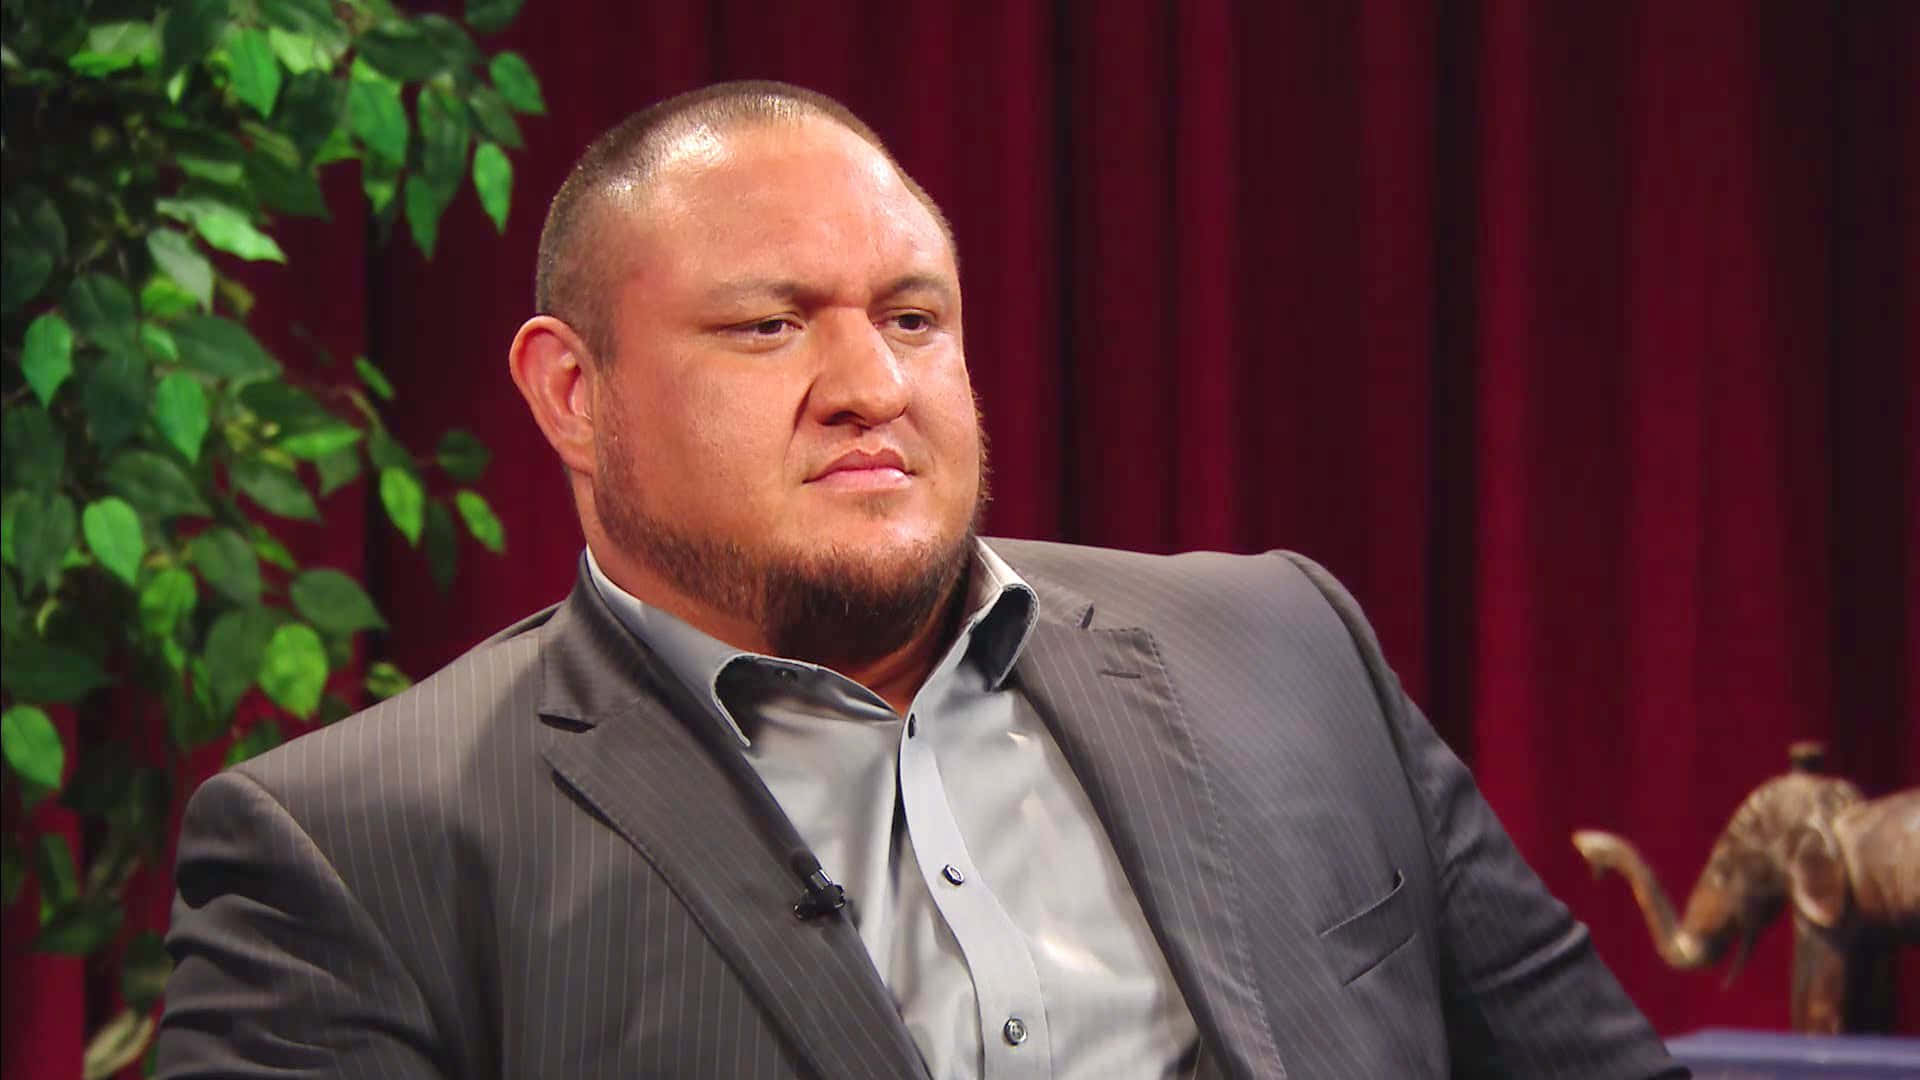 Samoa Joe Wwe Raw Interview 2017